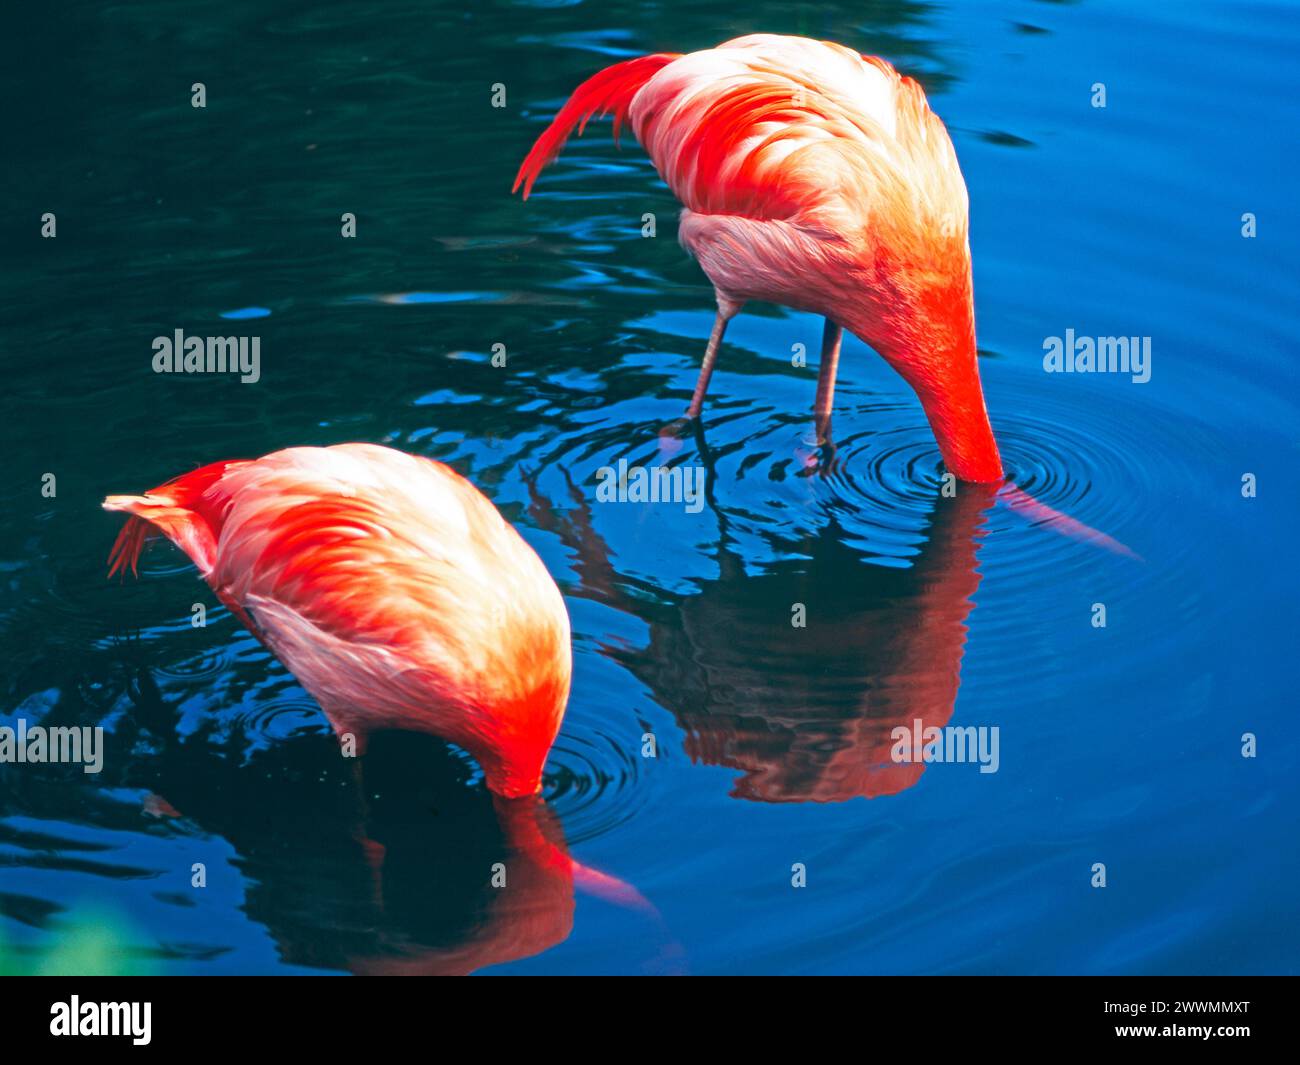 Zwei Rote Flamingos, auch Kubaflamingos, eine Unterart der Rosaflamingos Phoenicopterus ruber, auf Nahrungssuche kopfunter im Wasser Rote Flamingos *** Two red flamingos, also known as Cuban flamingos, a subspecies of pink flamingos Phoenicopterus ruber, foraging upside down in the water Red flamingos Stock Photo